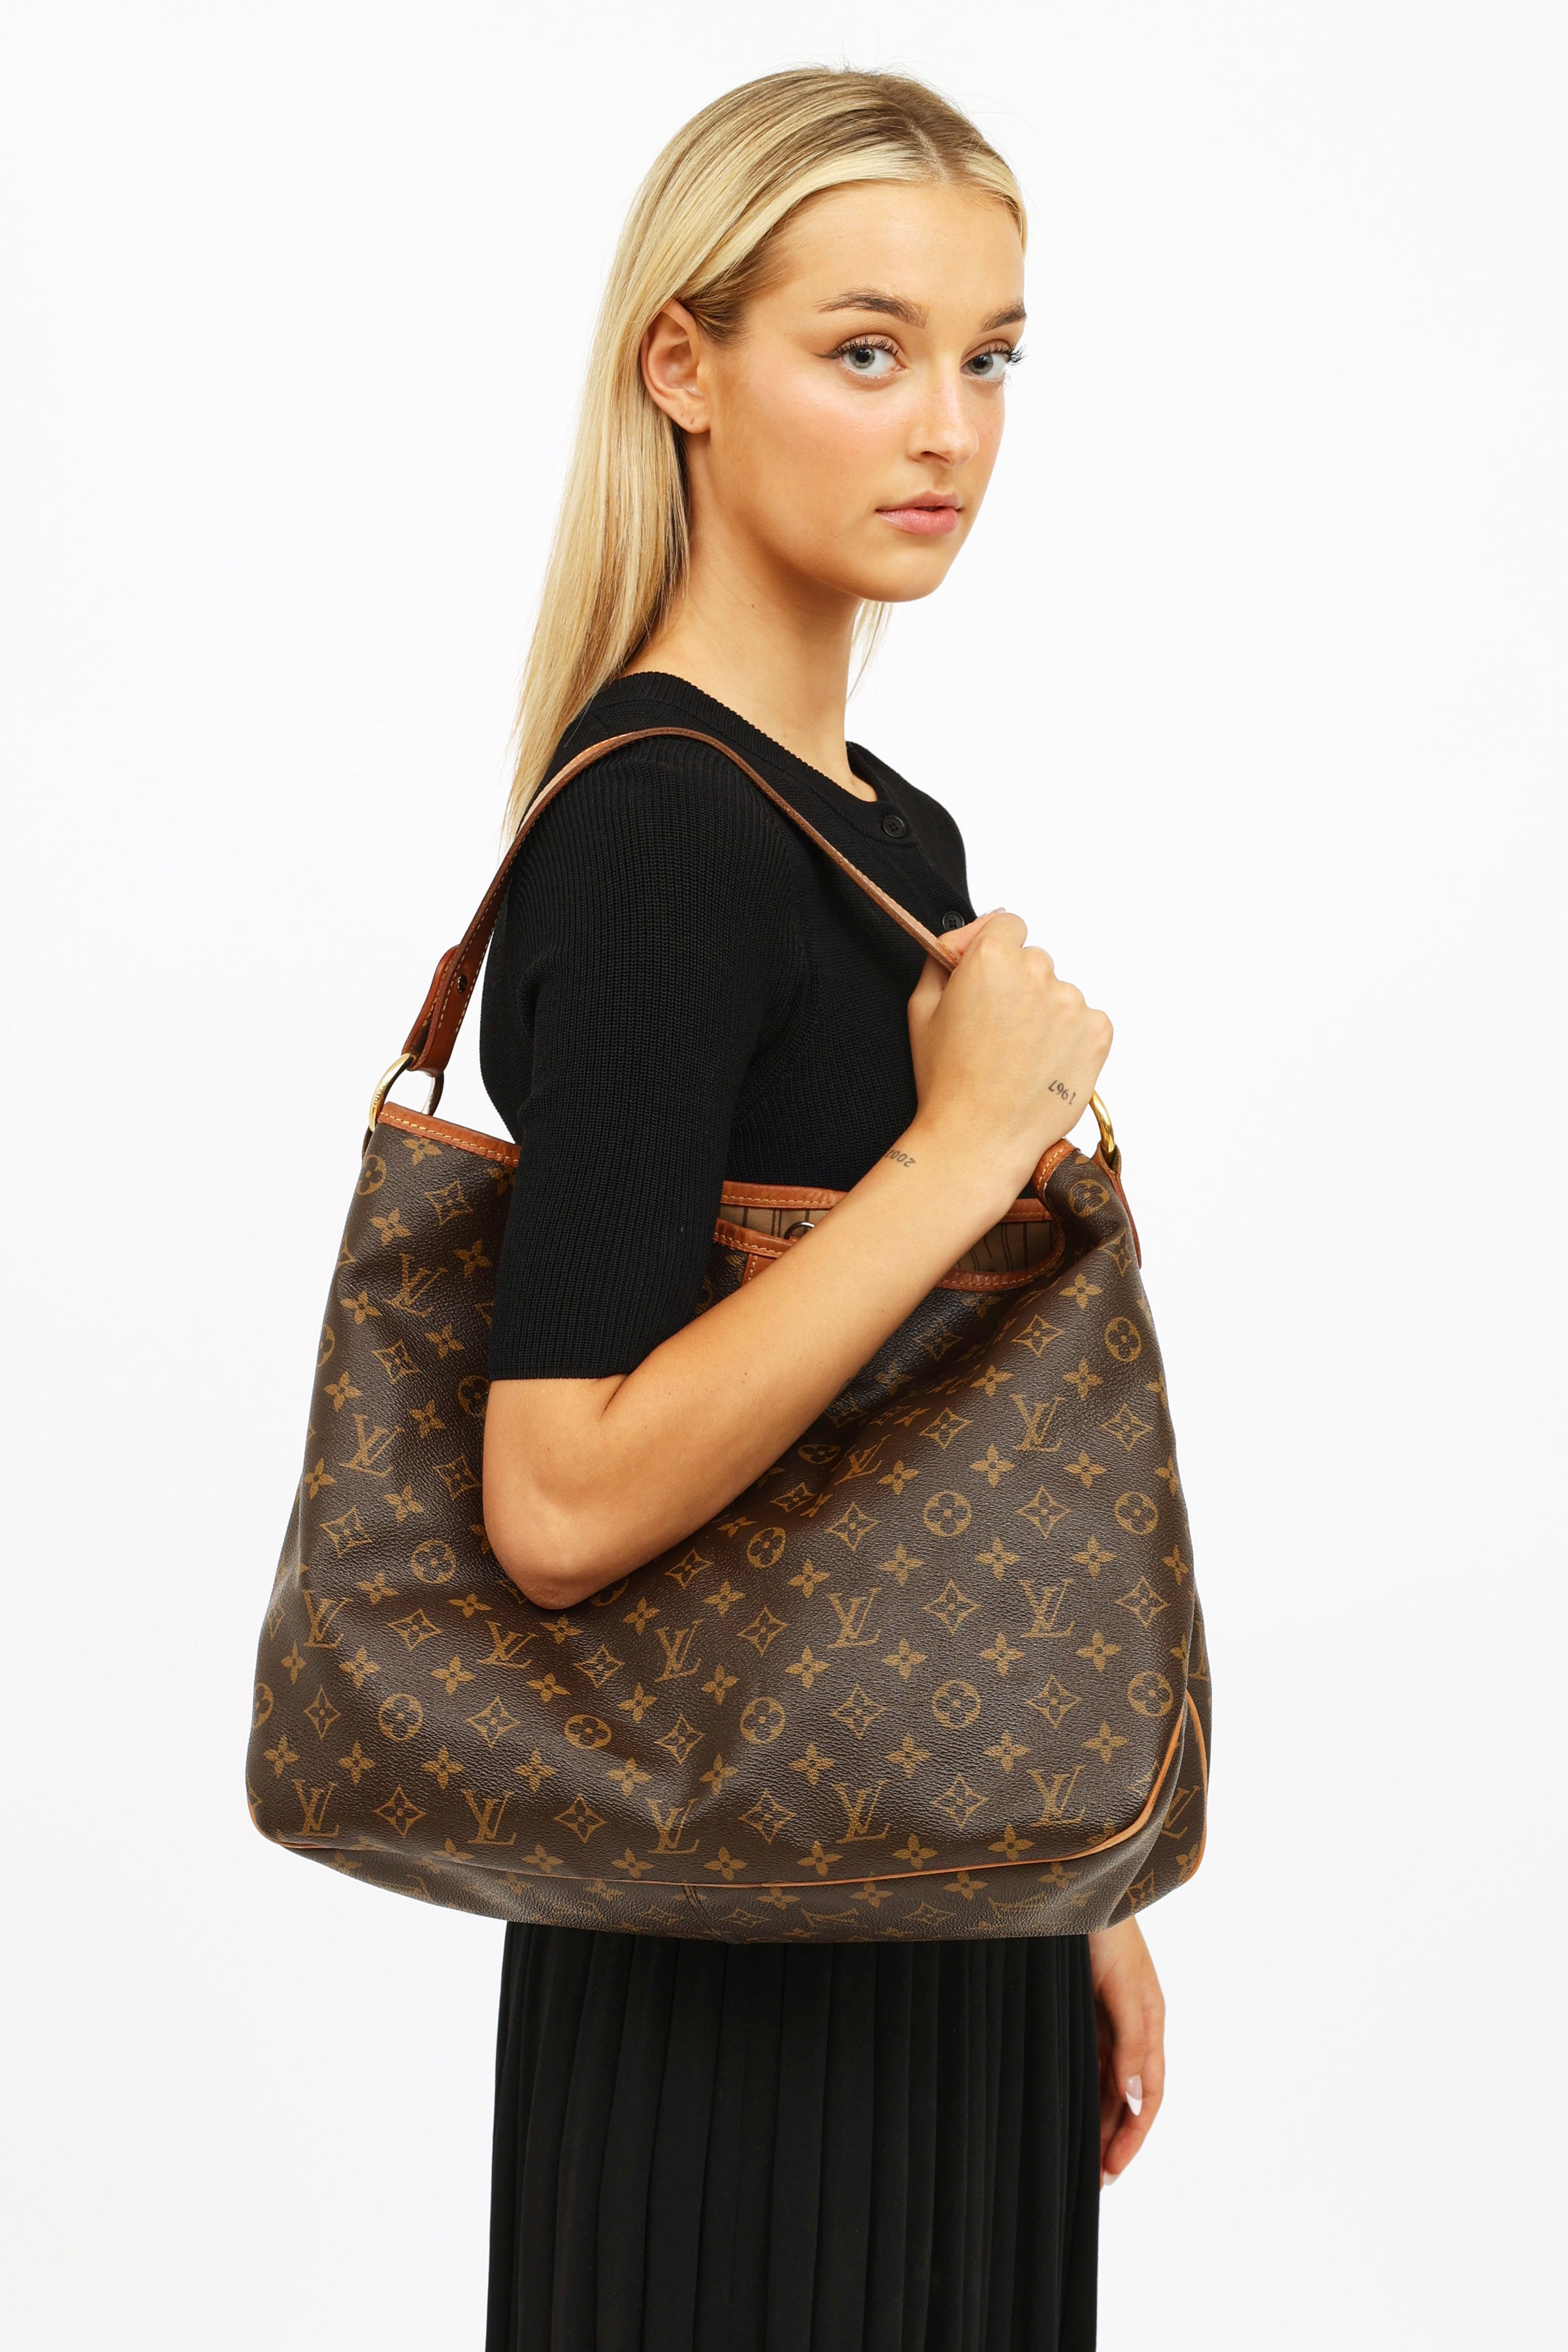 Louis Vuitton Artsy GM Monogram Canvas Shoulder Bag